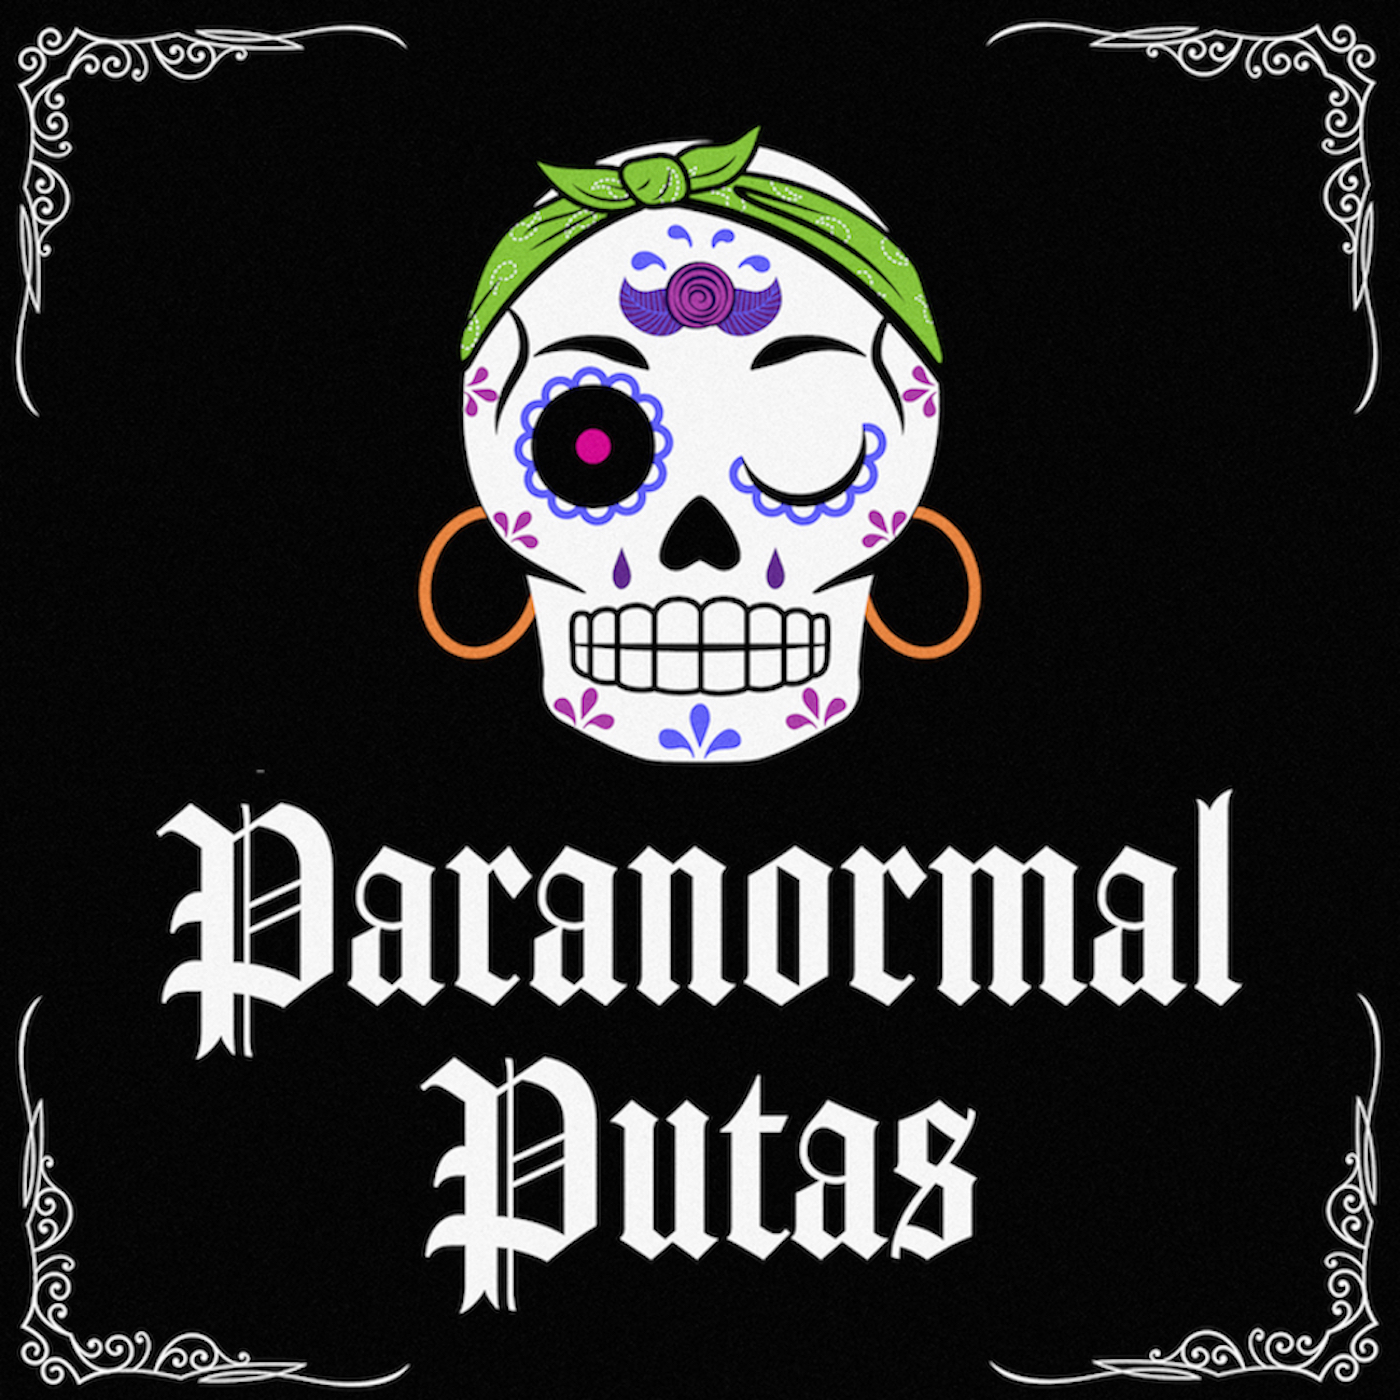 The Paranormal Putas’ Podcast